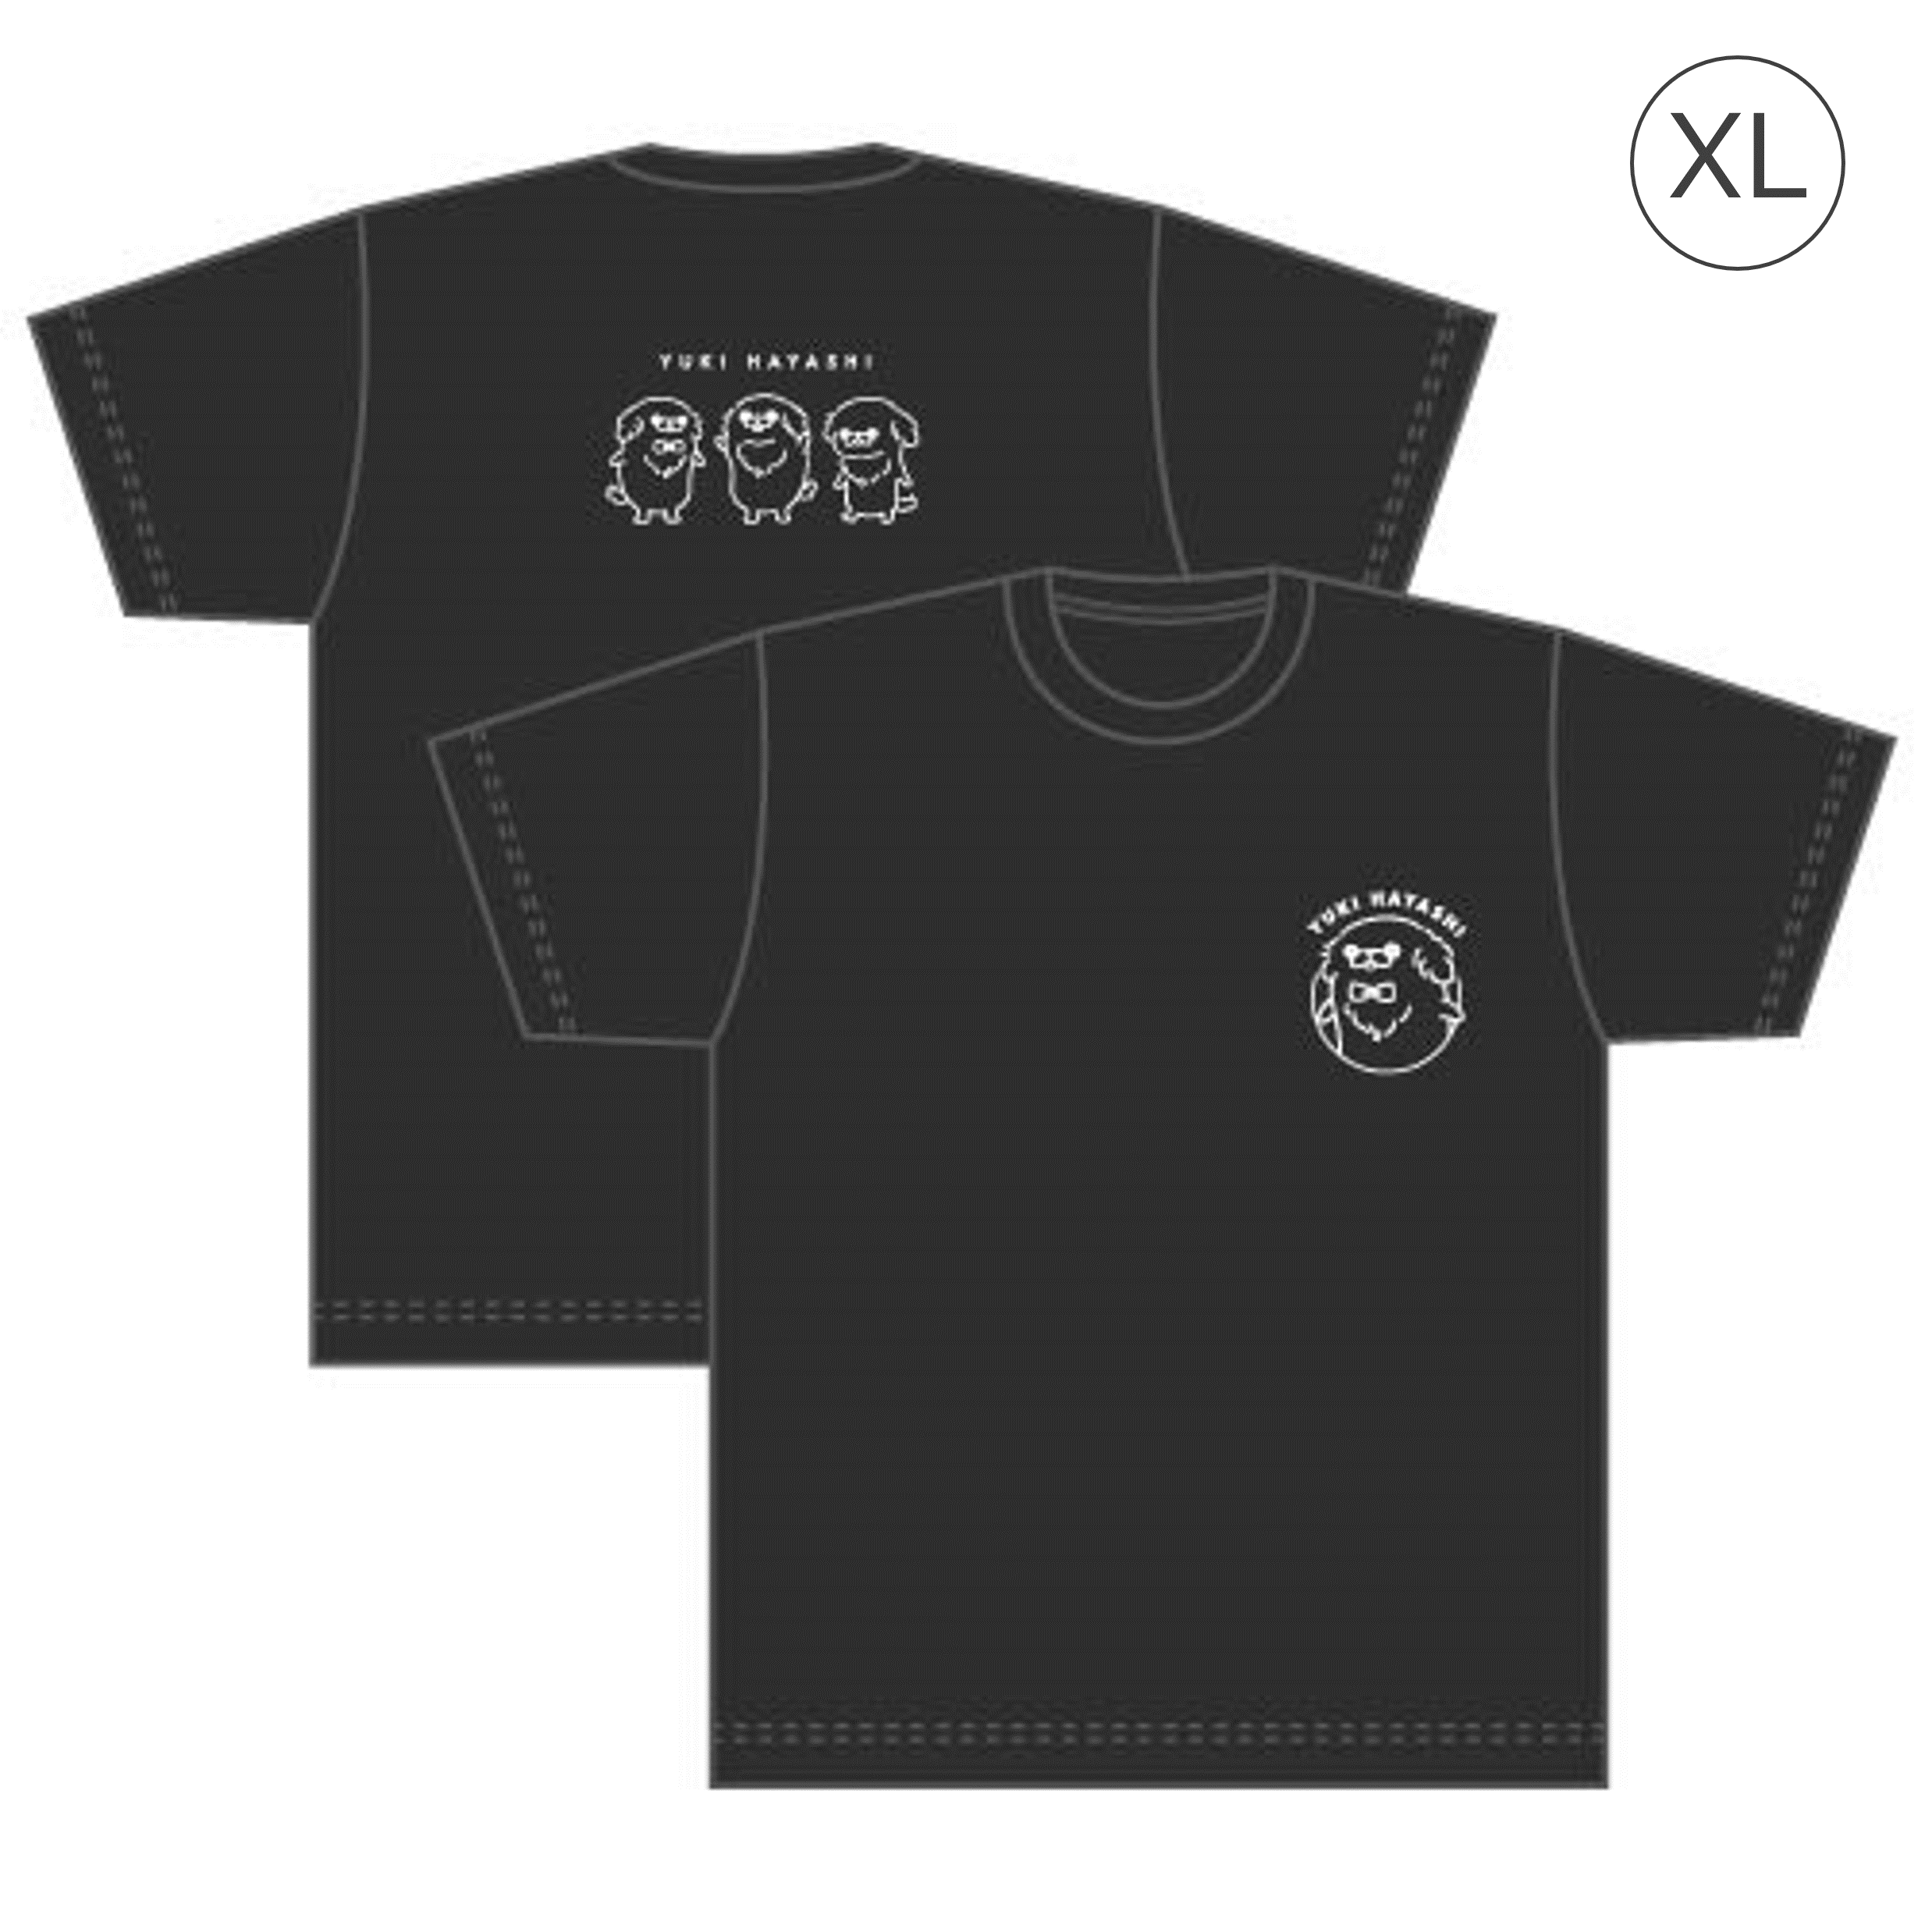 T-shirt (Black / XL size)